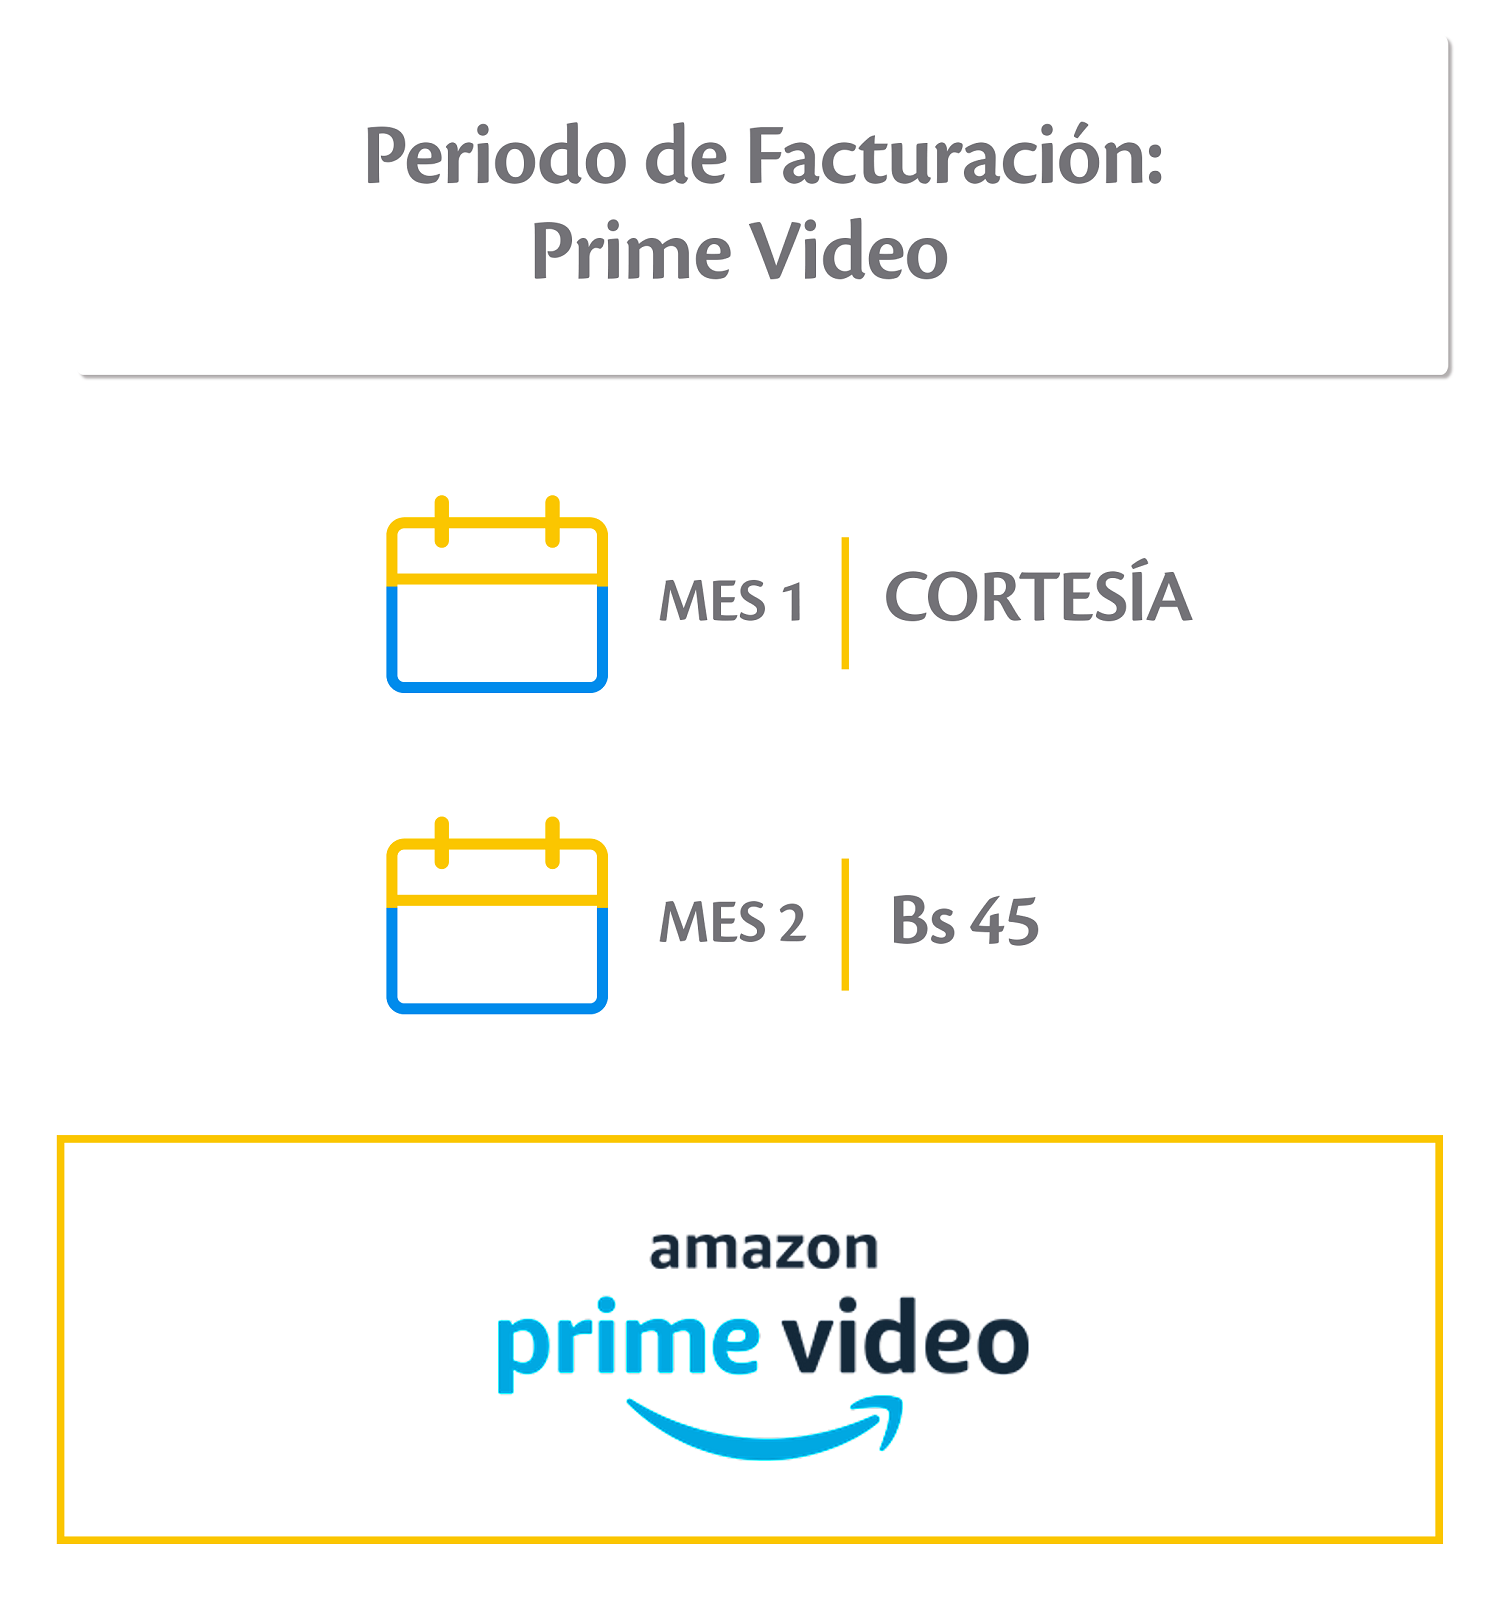 aw-Cambio de precio Amazon Prime Video.png